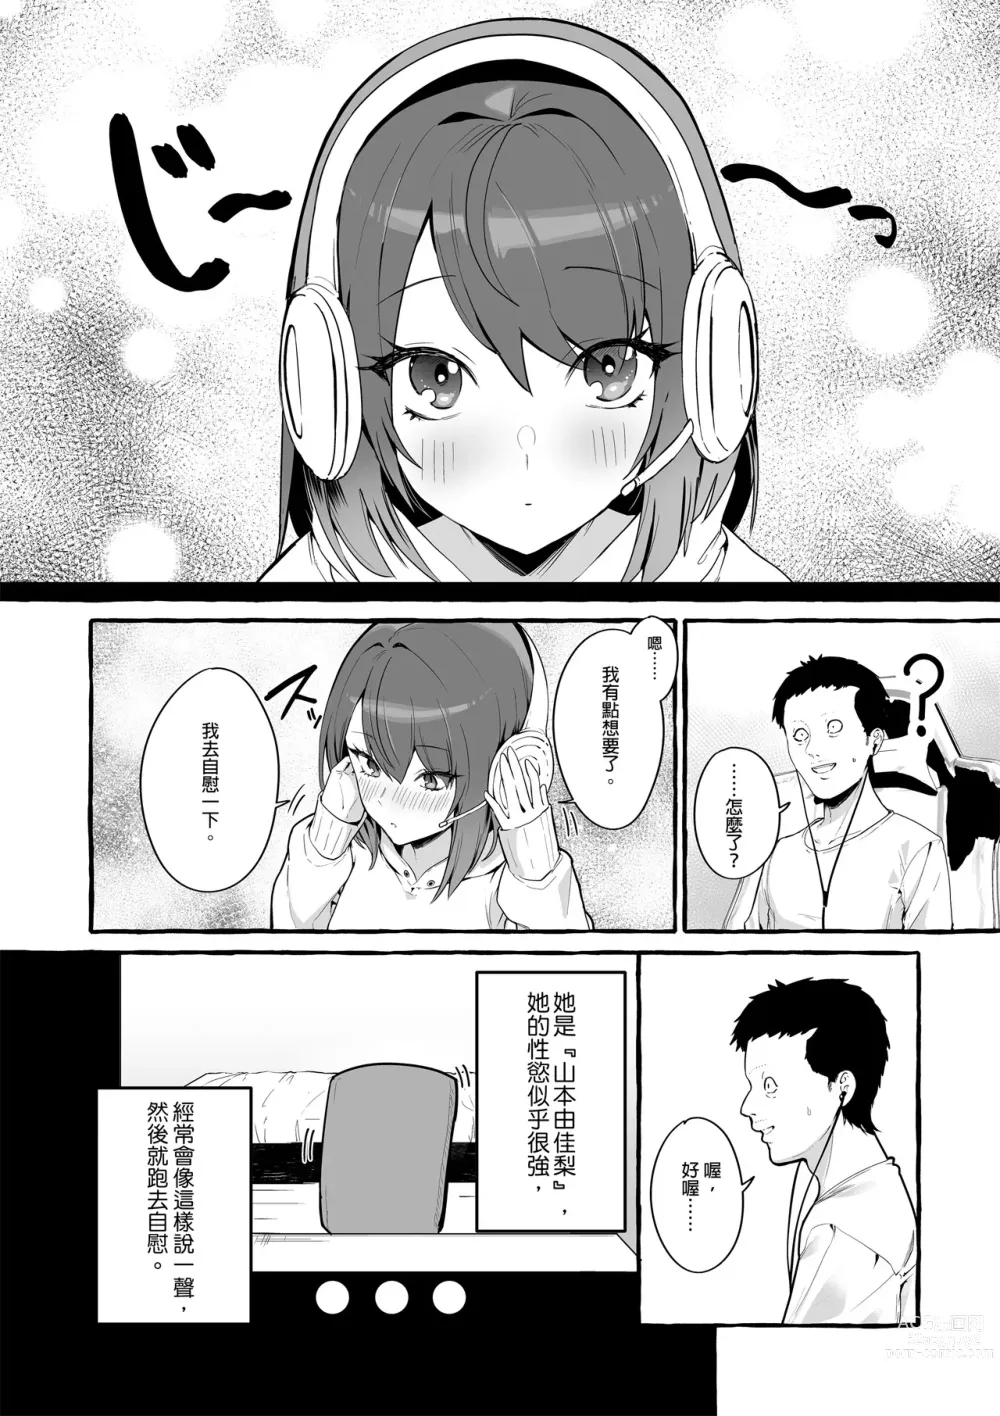 Page 3 of doujinshi ネットで出会った巨乳彼女と会ったら搾り取られまくった話。